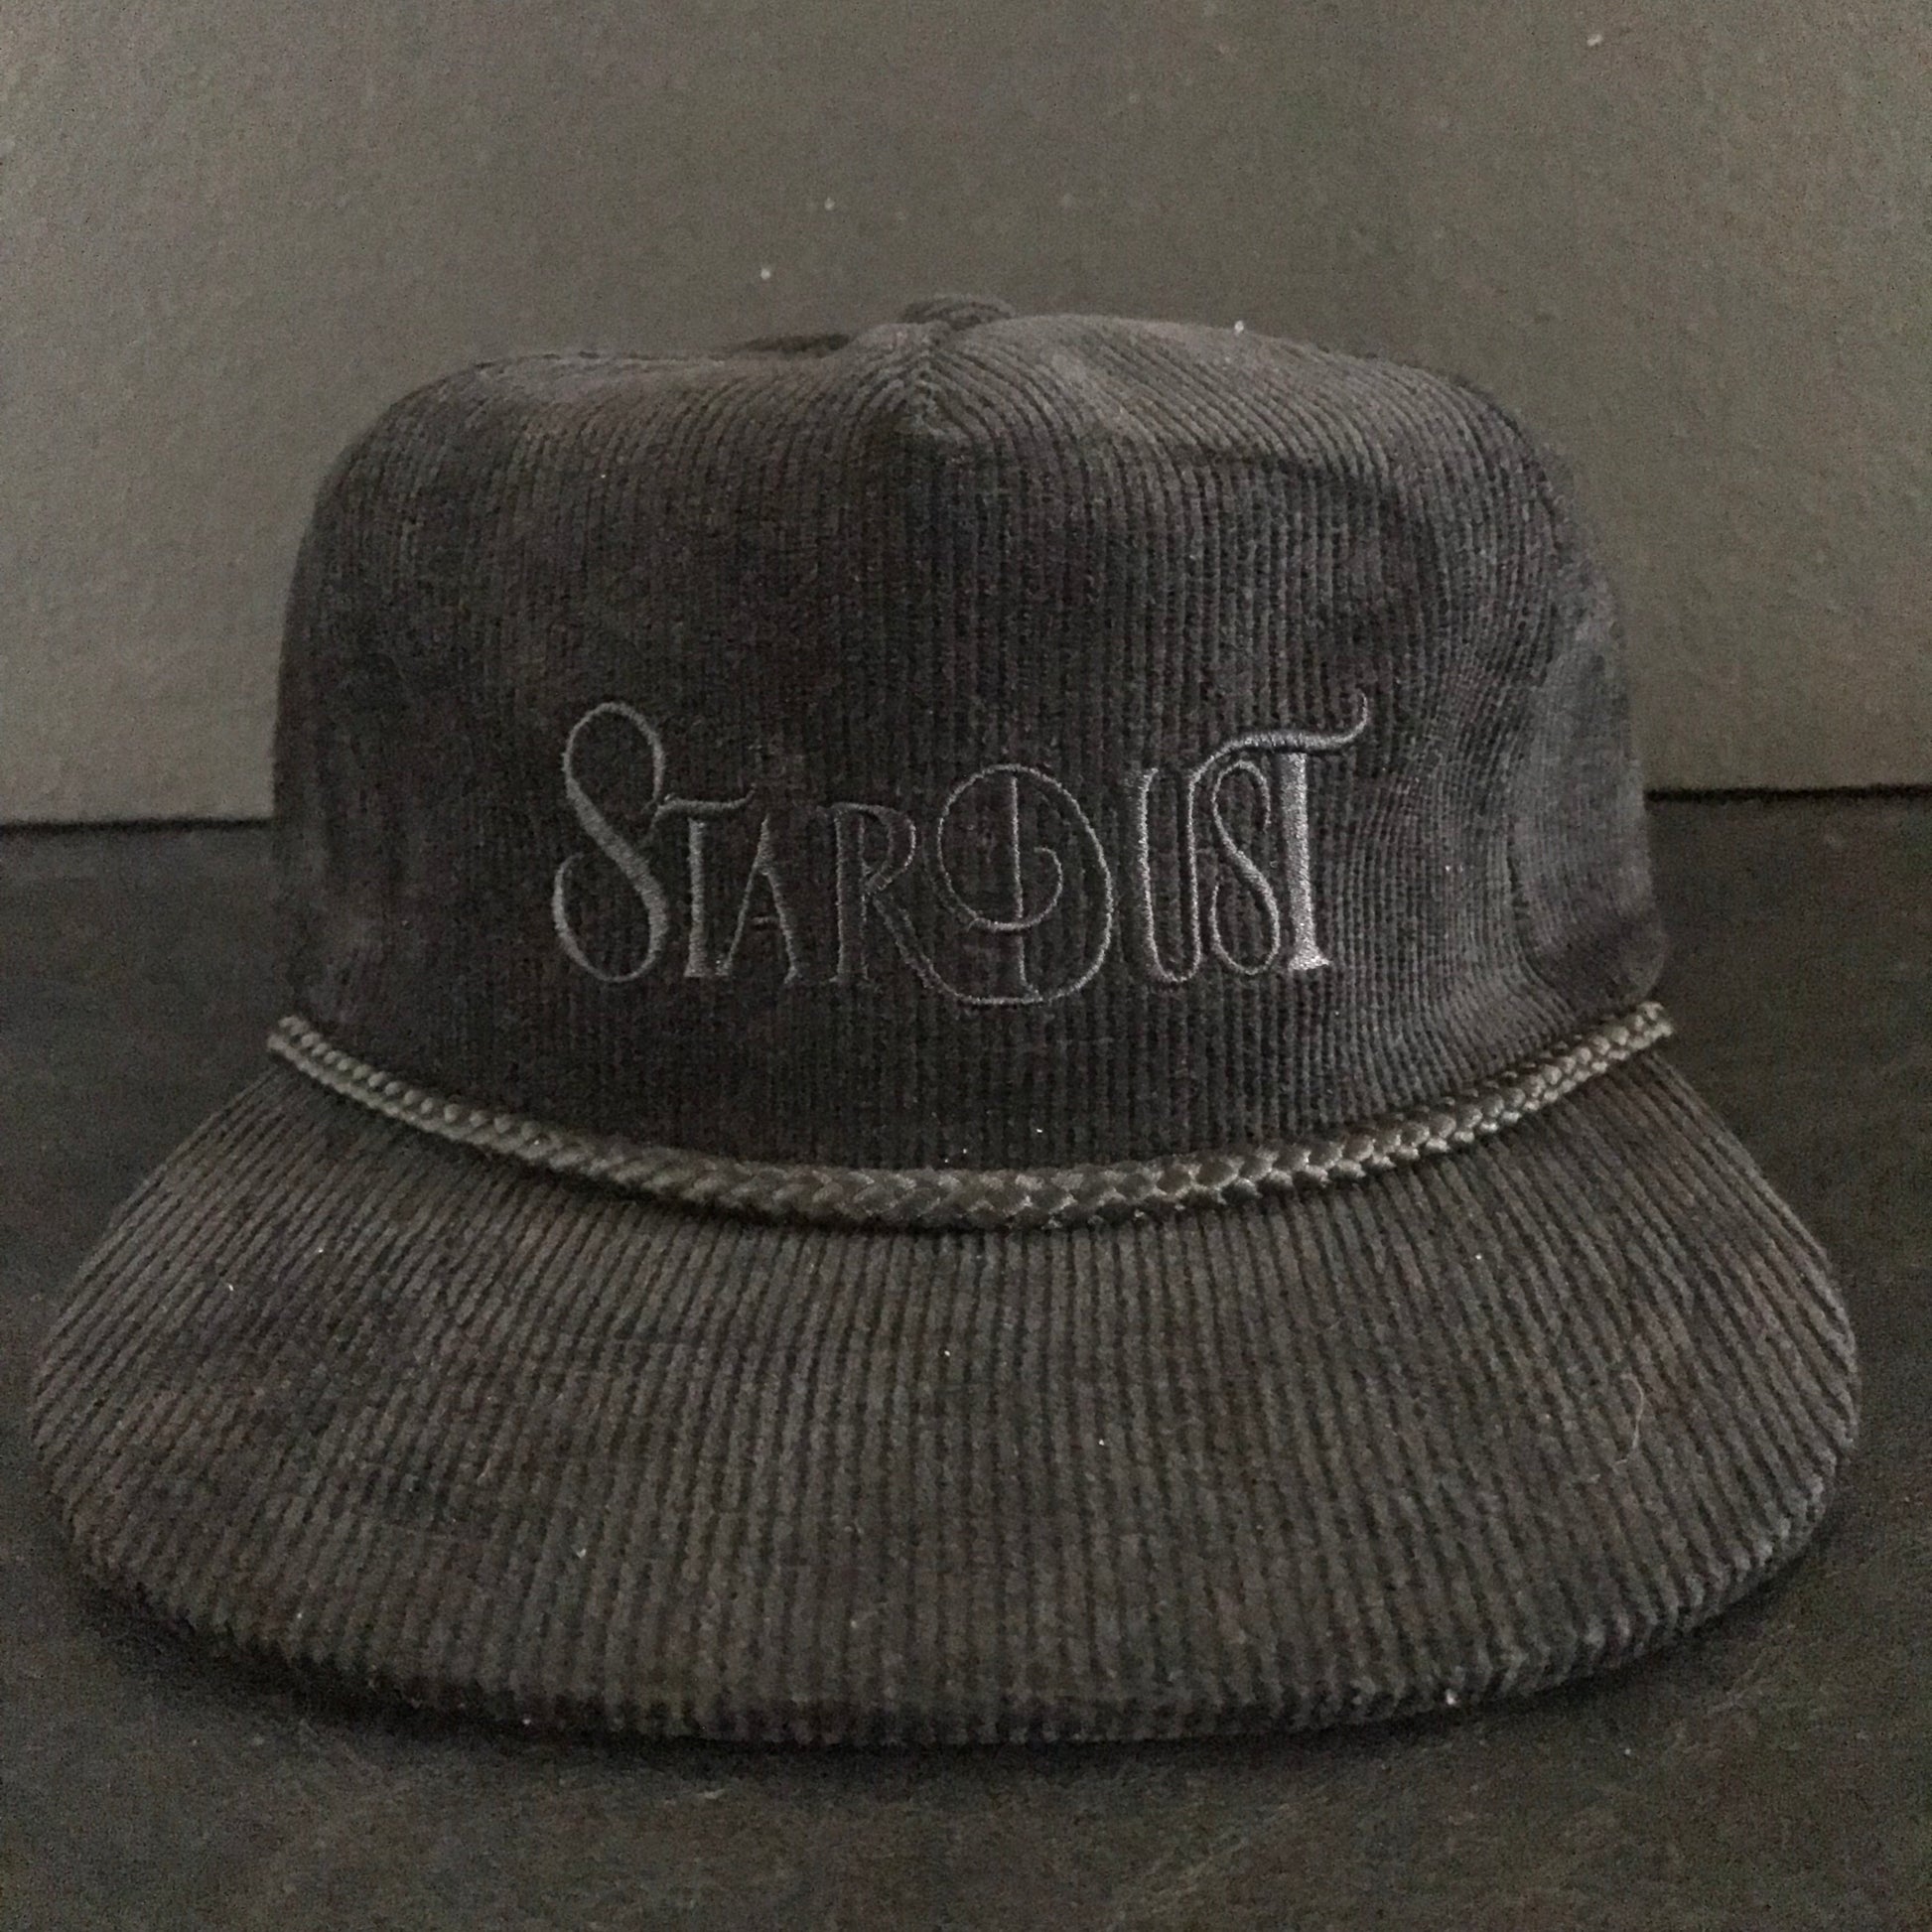 Stardust Skate Shop Wanderlust Corduroy Snapback Hat 001 Black / Black 